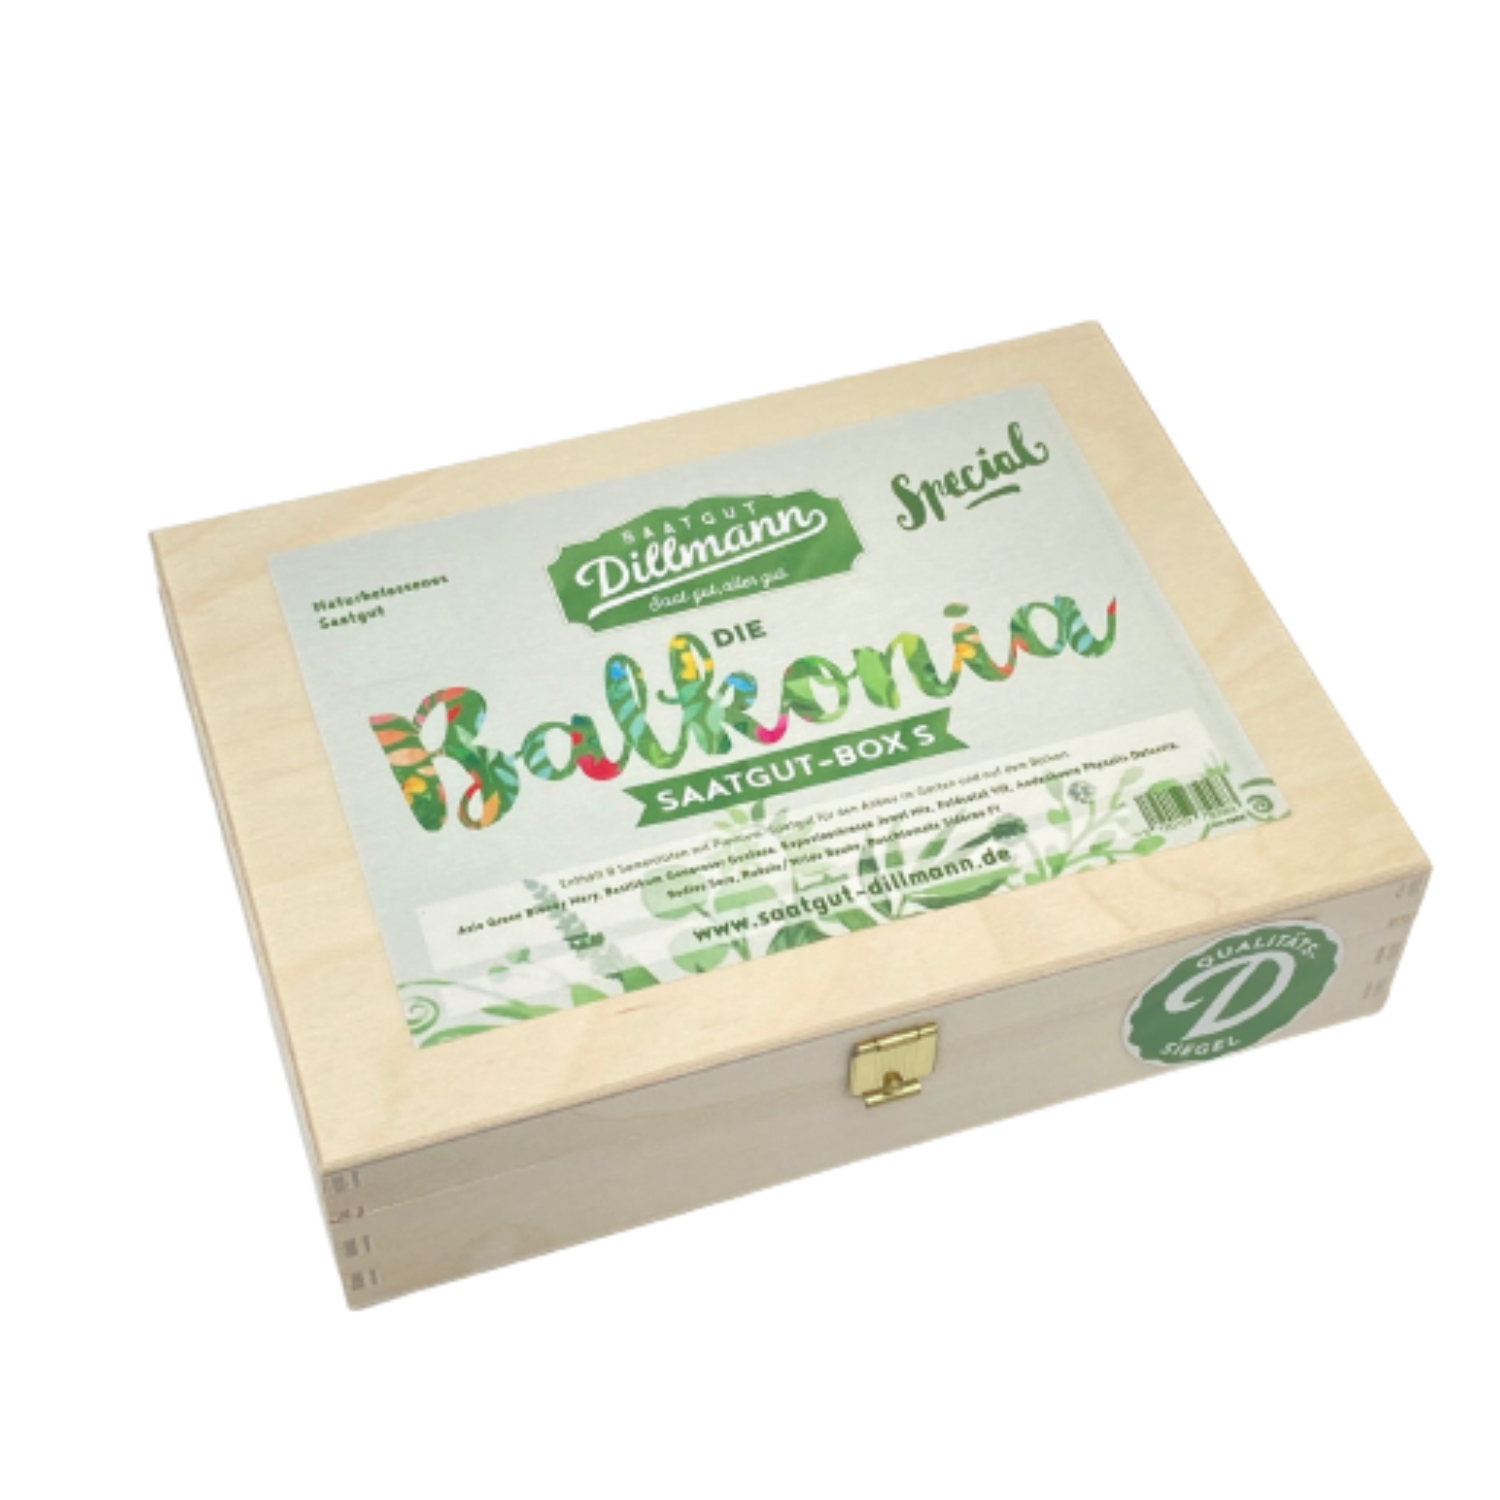 Saatgut-Box Holz: Balkonia-S für Hobbygärtner